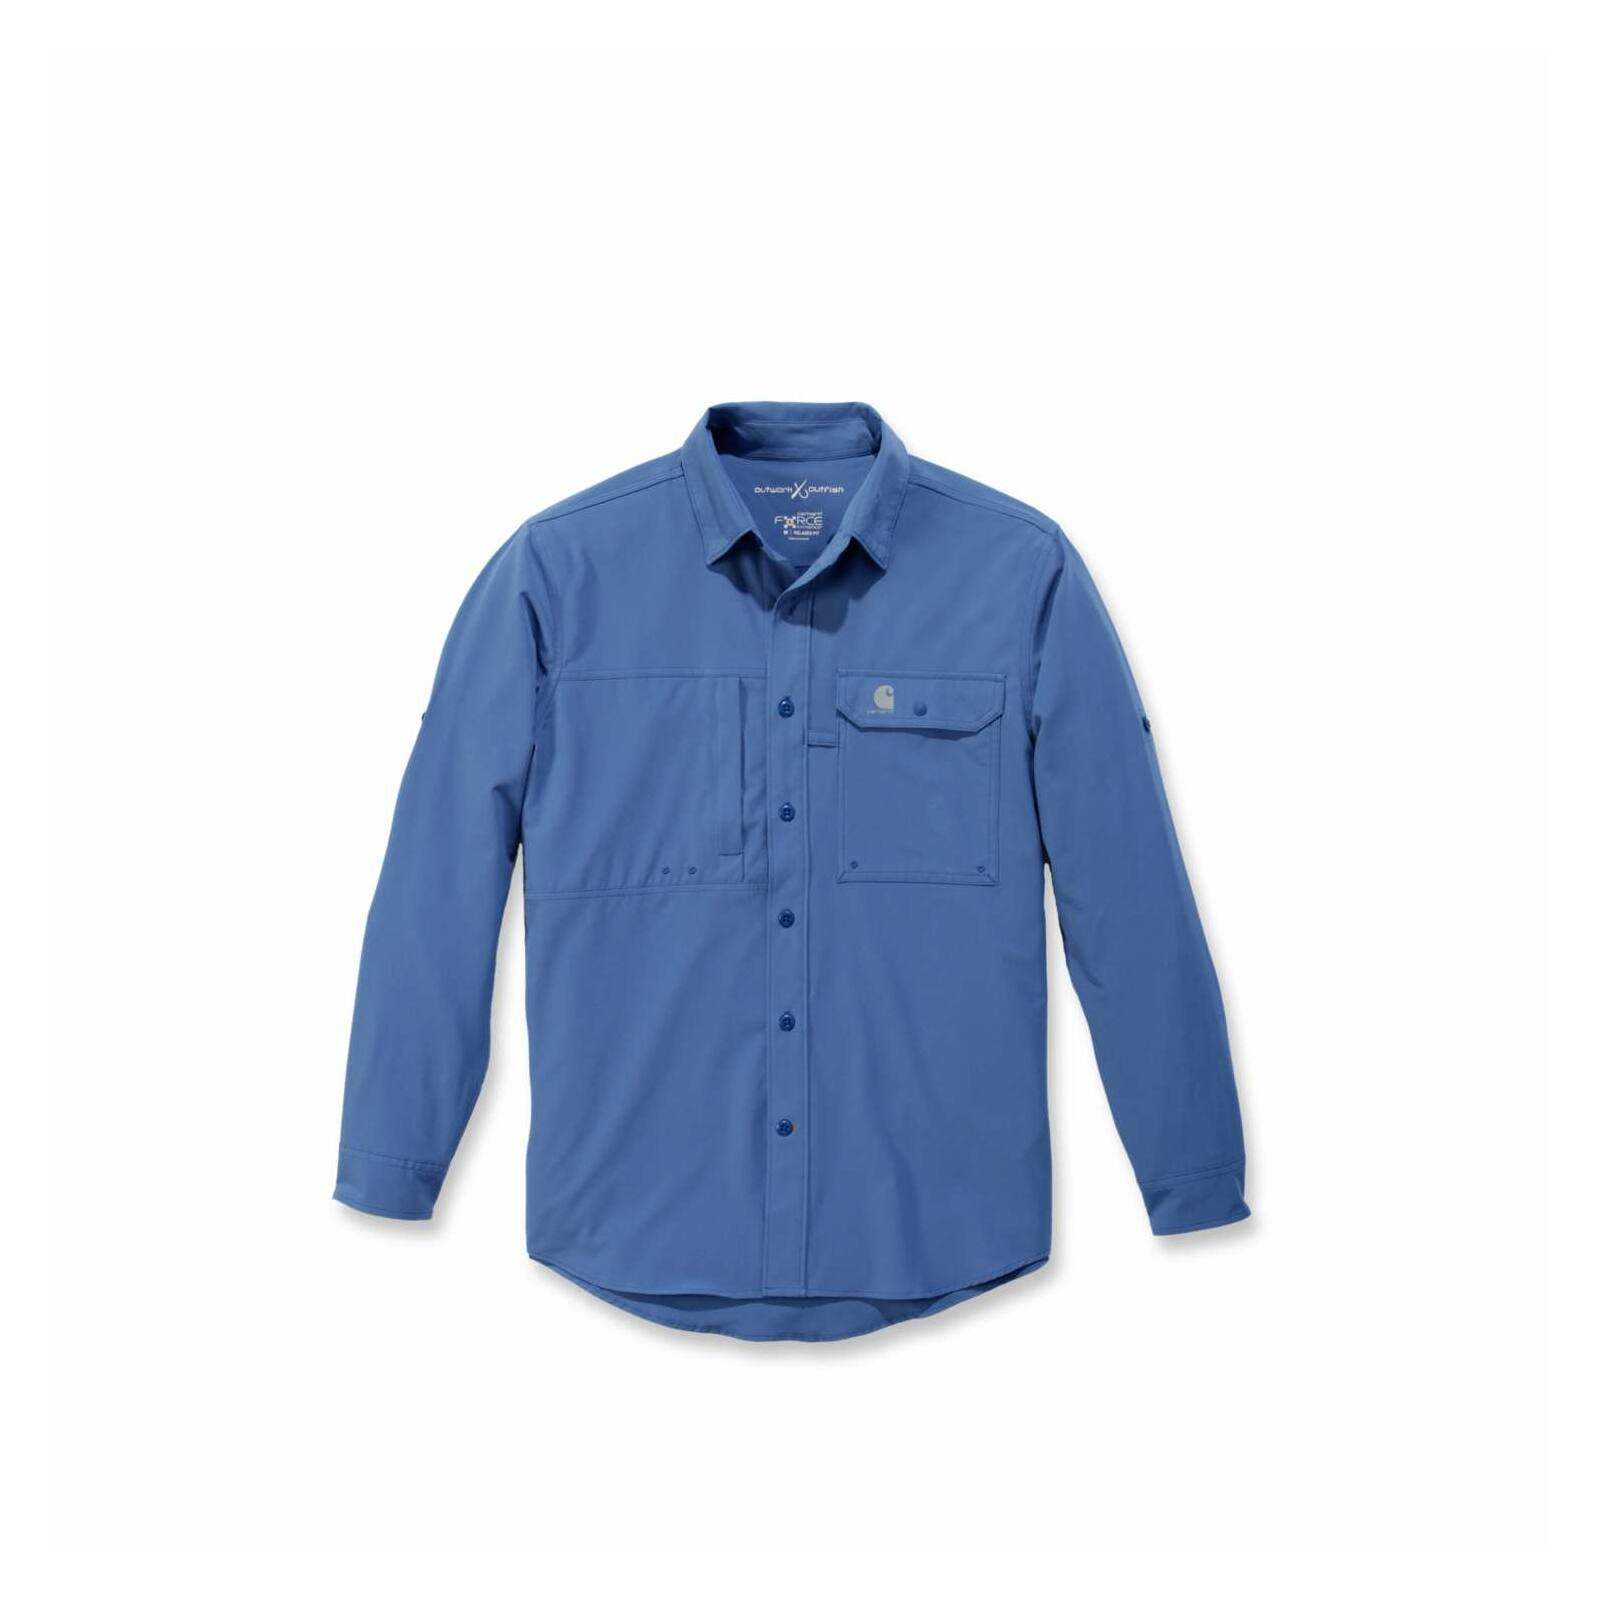 Carhartt Force Extremes Angler Long-Sleeve Shirt - Ltd Edition - Road,  62,90 €